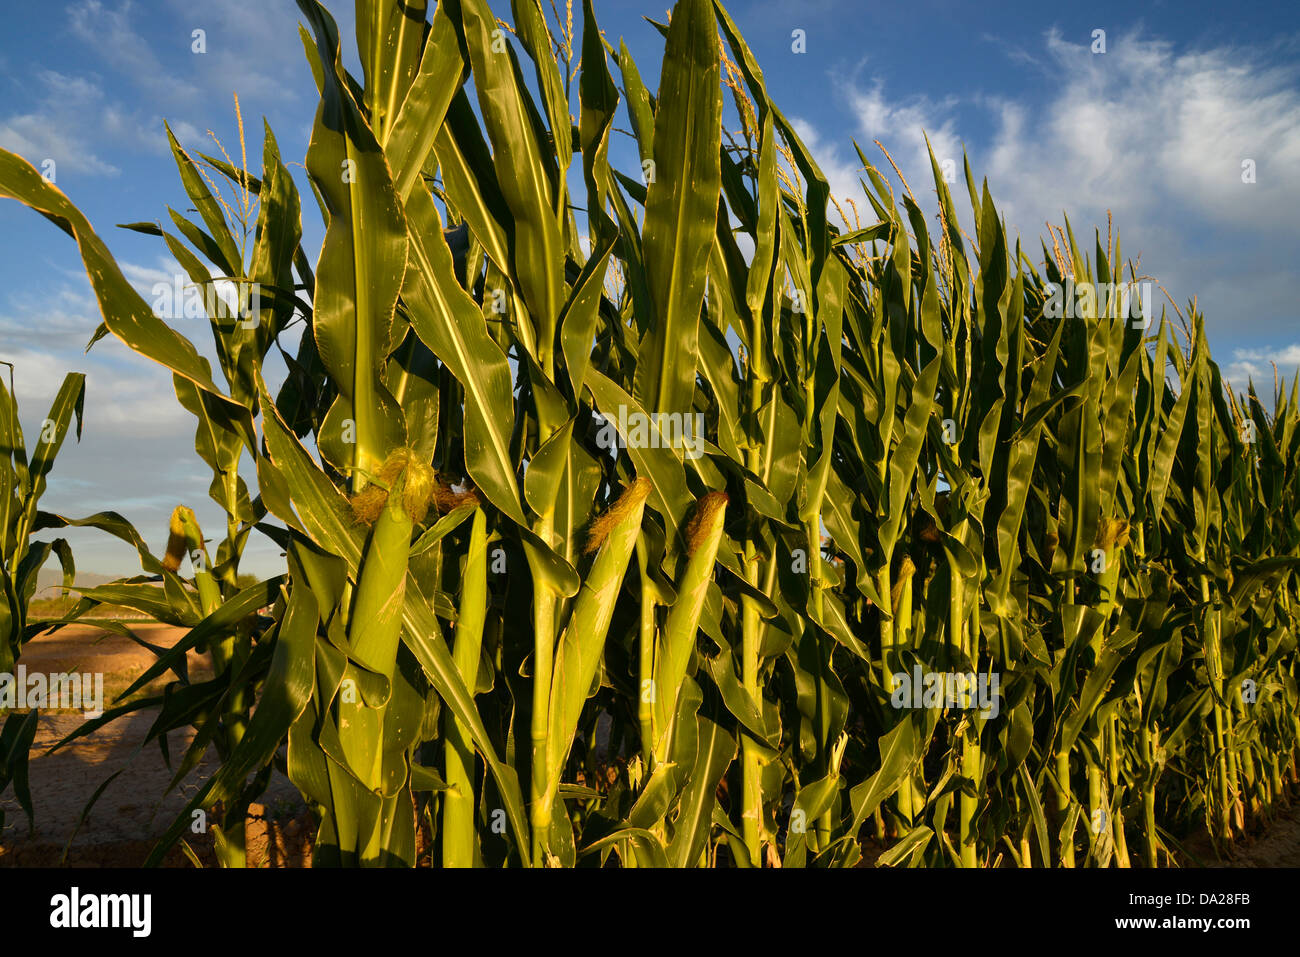 Stalks of corn grow in a field. Stock Photo